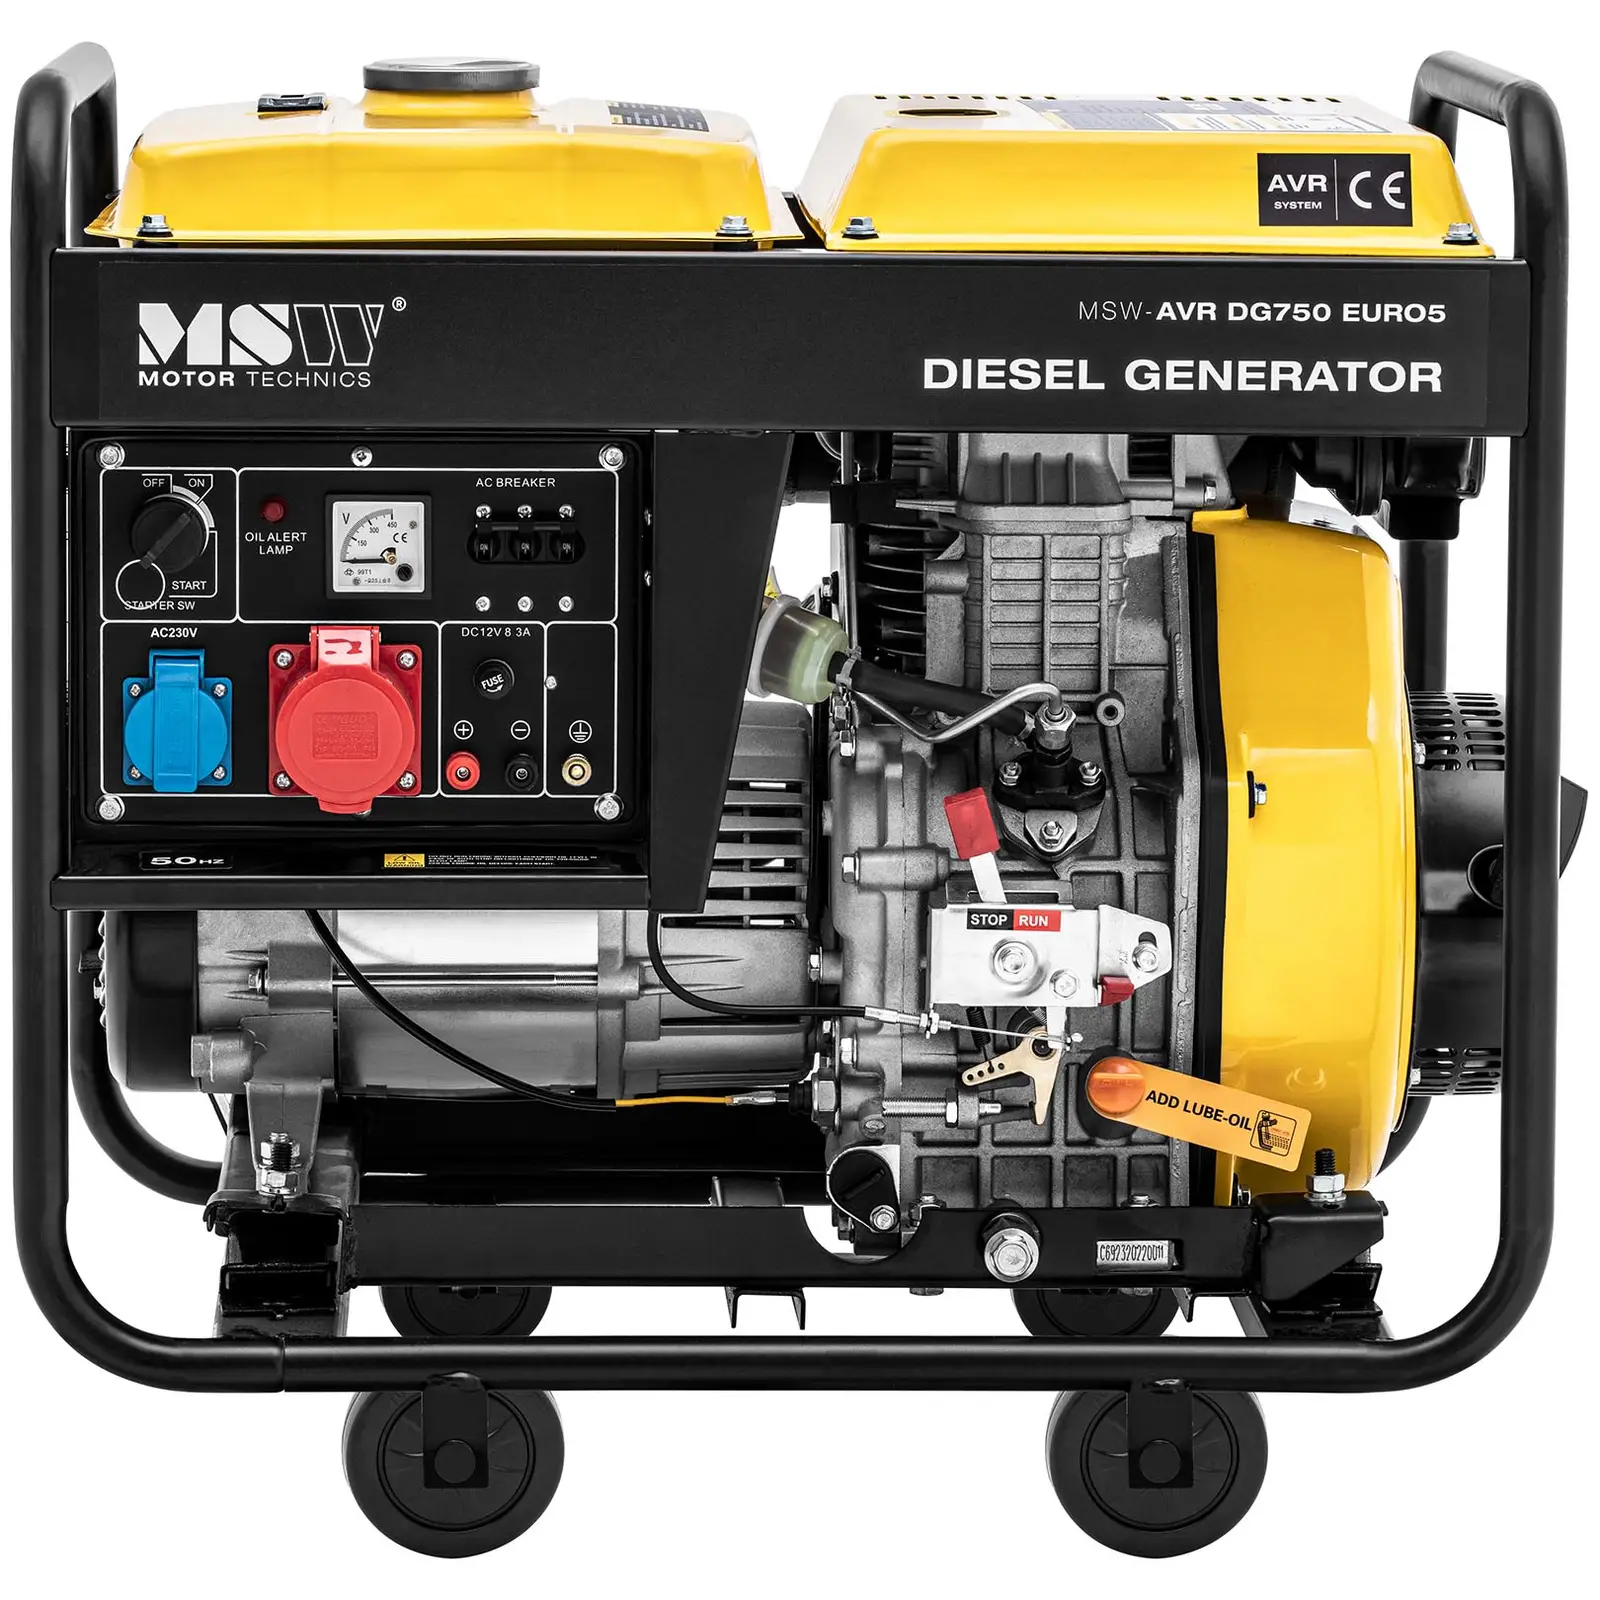 Noodgenerator diesel - 1650 / 4600 W - 12,5 L - 230/400 V - mobiel - AVR - Euro 5